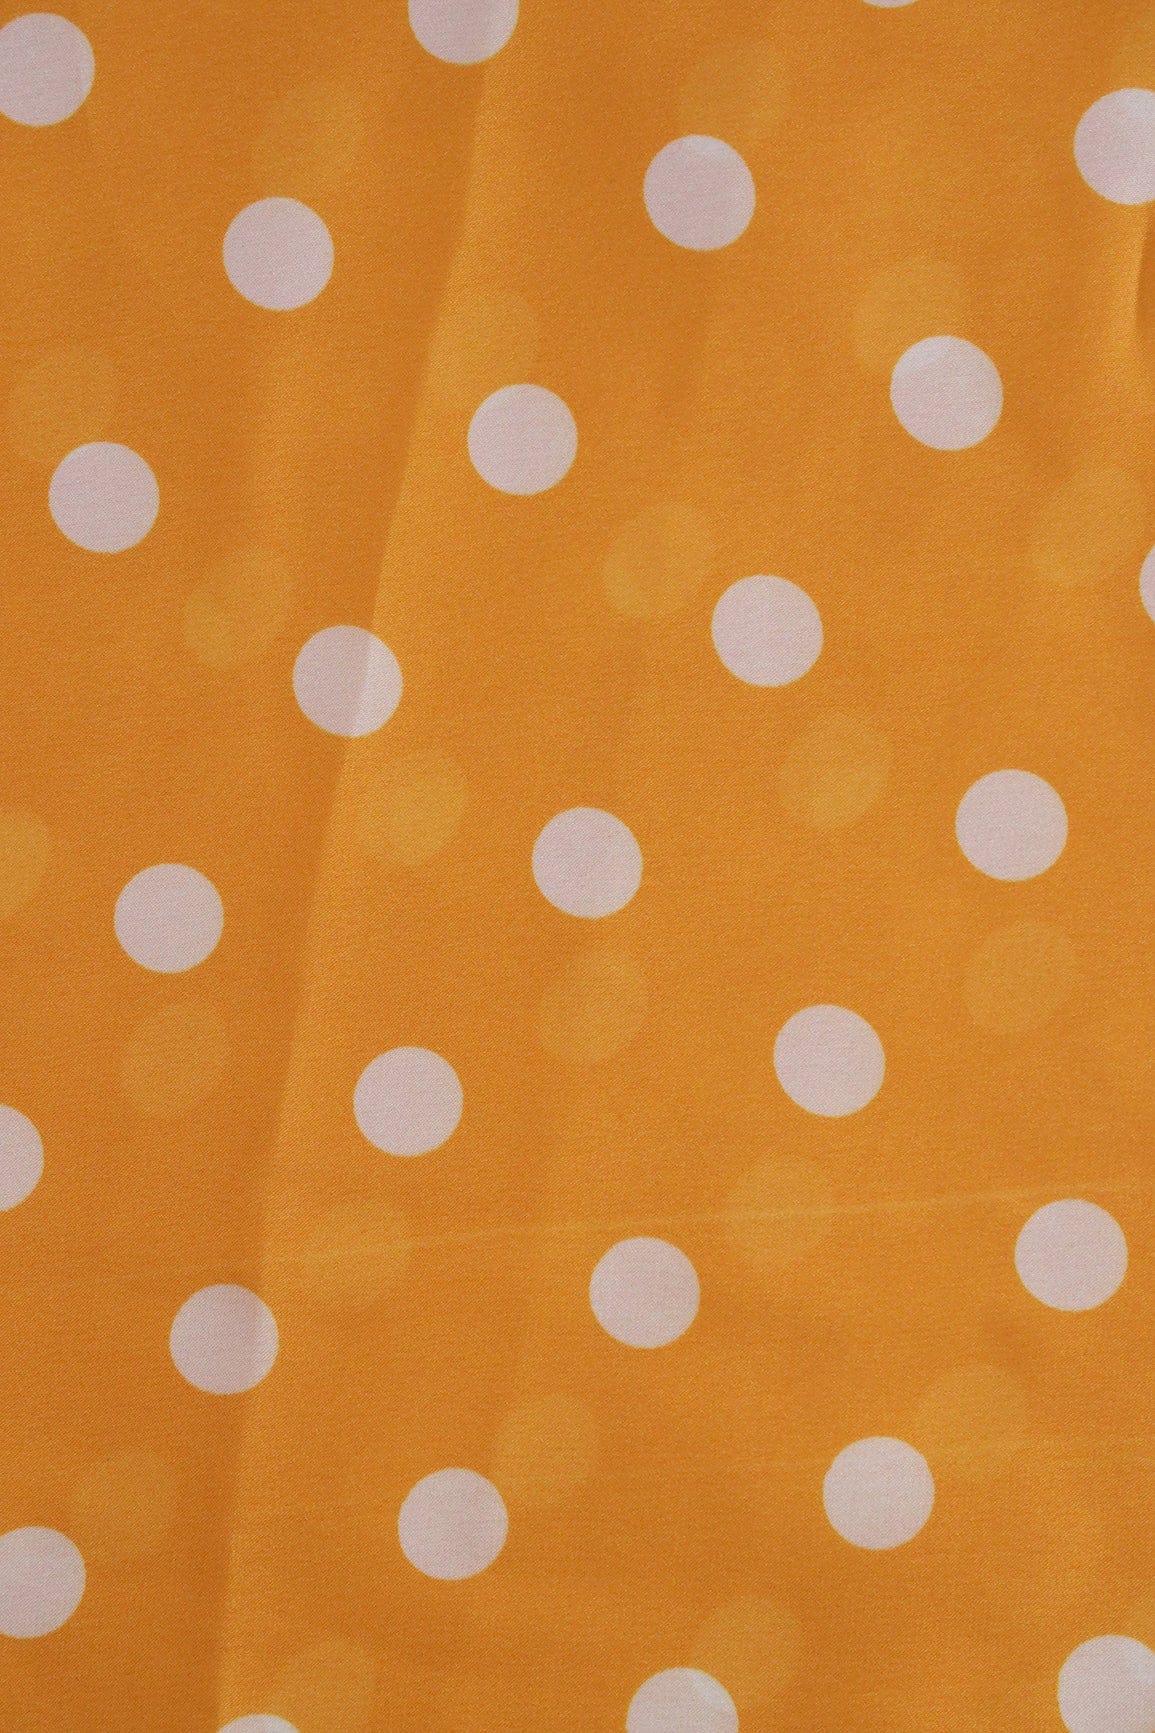 doeraa Prints Yellow And White Polka Dots Pattern Digital Print On Georgette Satin Fabric